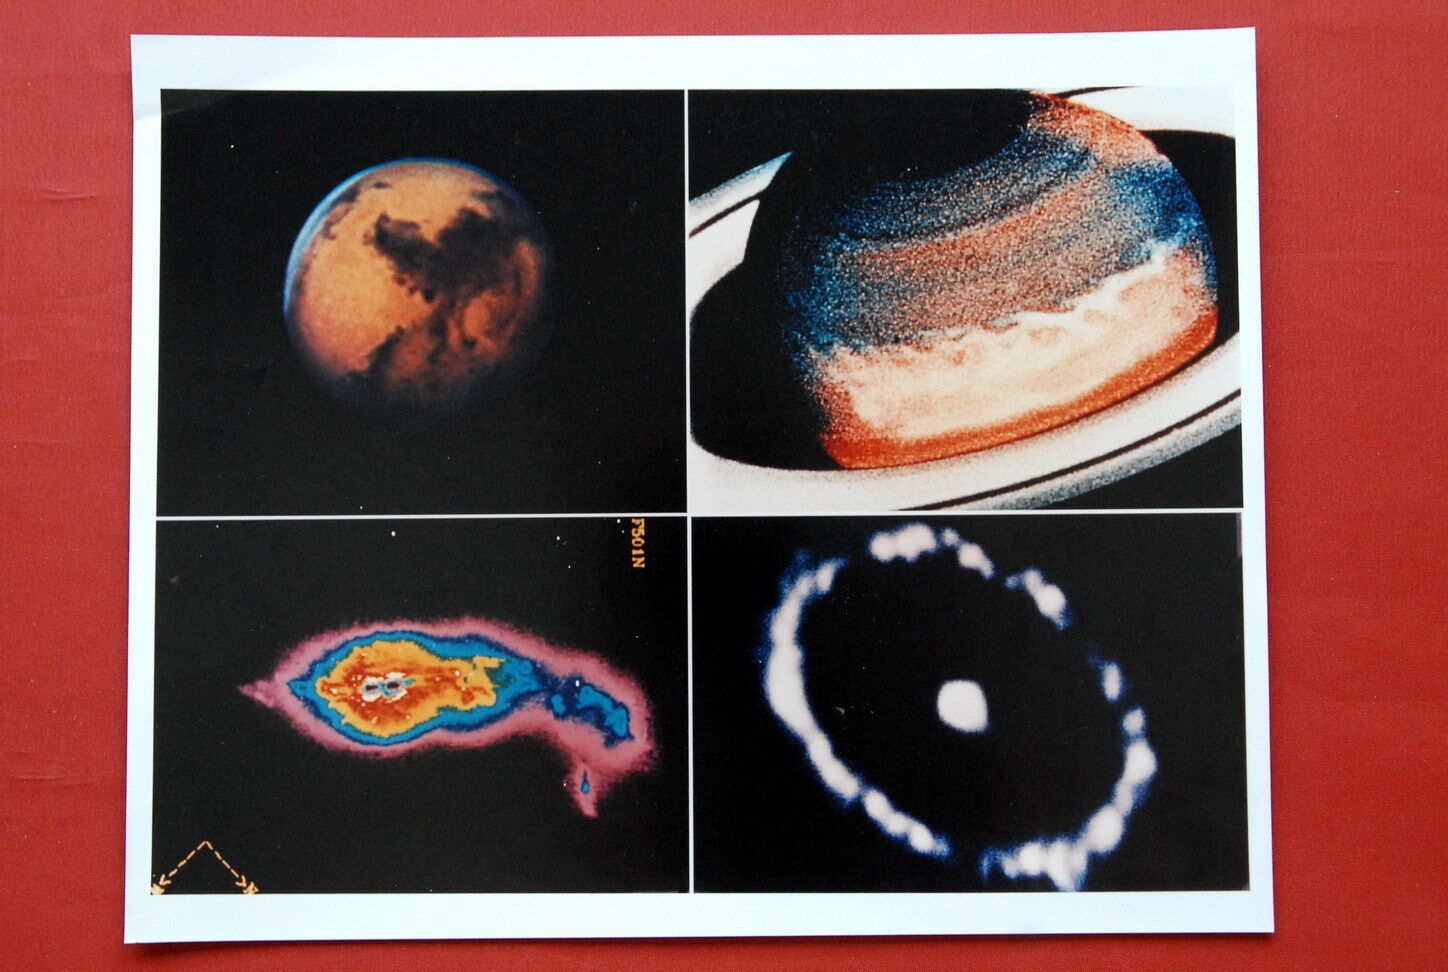 HUBBLE OBSERVES THE UNIVERSE ORIGINAL KODAK COLOR PHOTO MARS SATURN